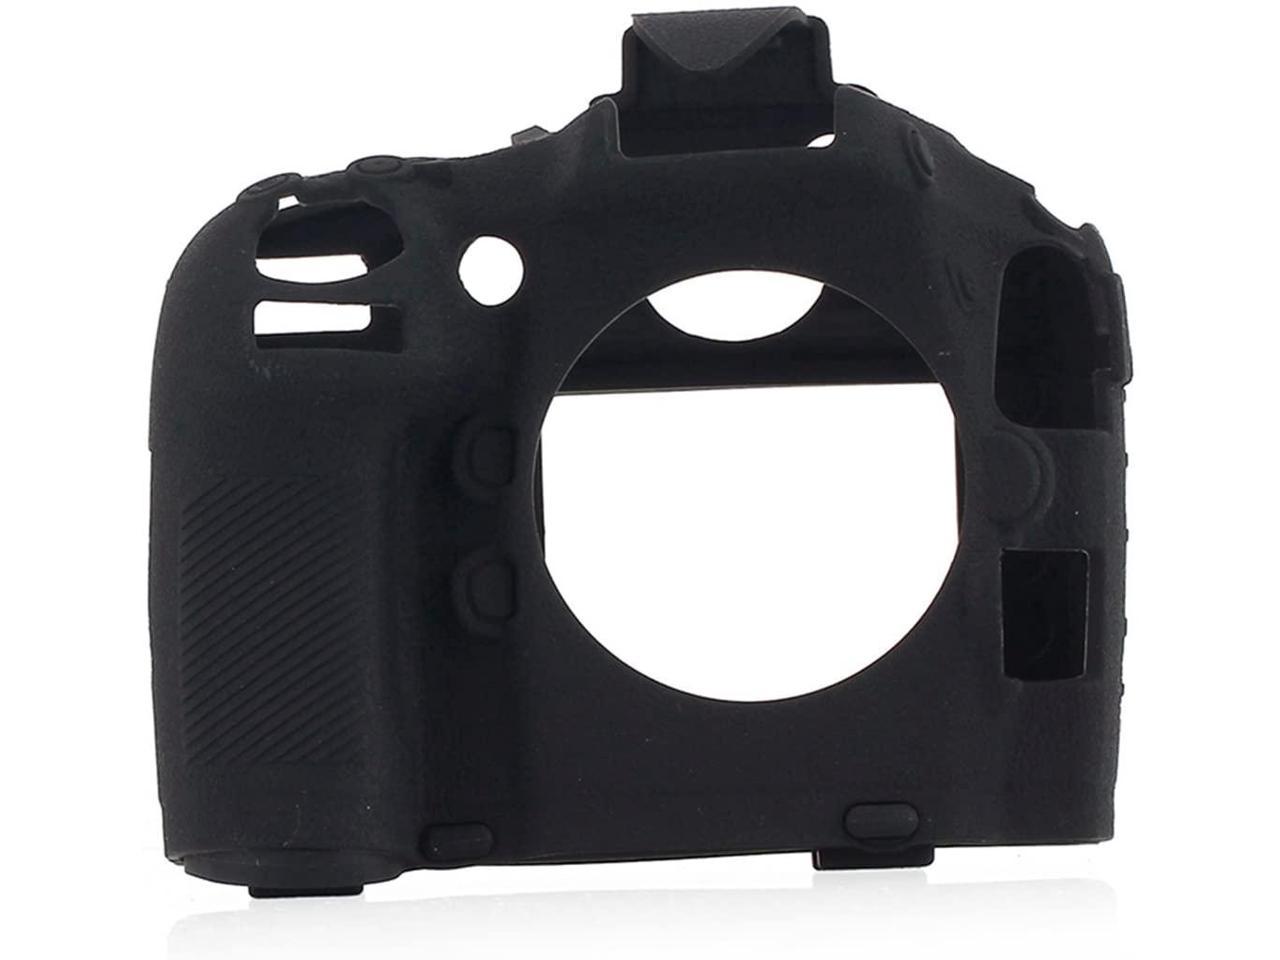 Black STSEETOP Nikon D850 Case Professional Silicone Rubber Camera Case Cover Detachable Protective CAE for Nikon D850 